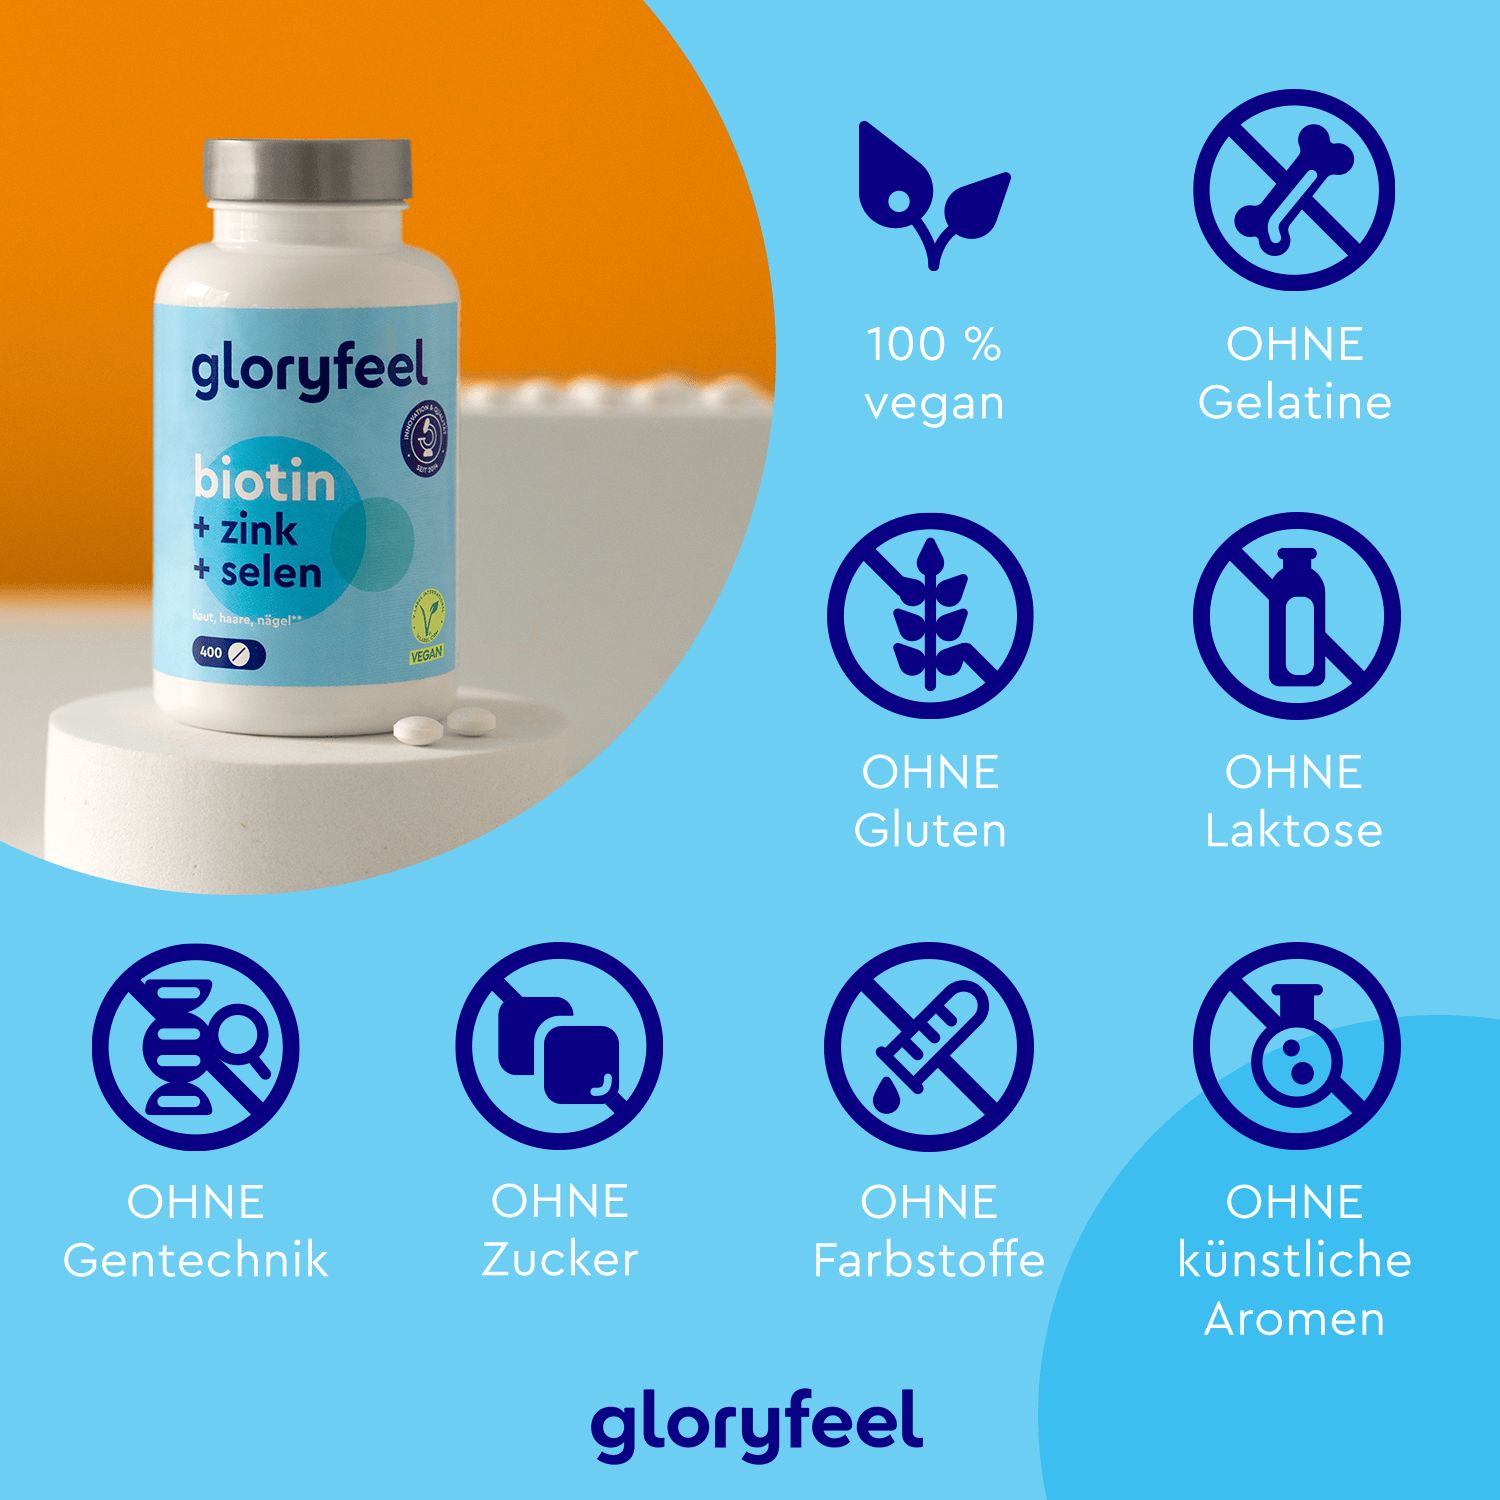 gloryfeel® Biotin 400 + Zink + Selen Tabletten